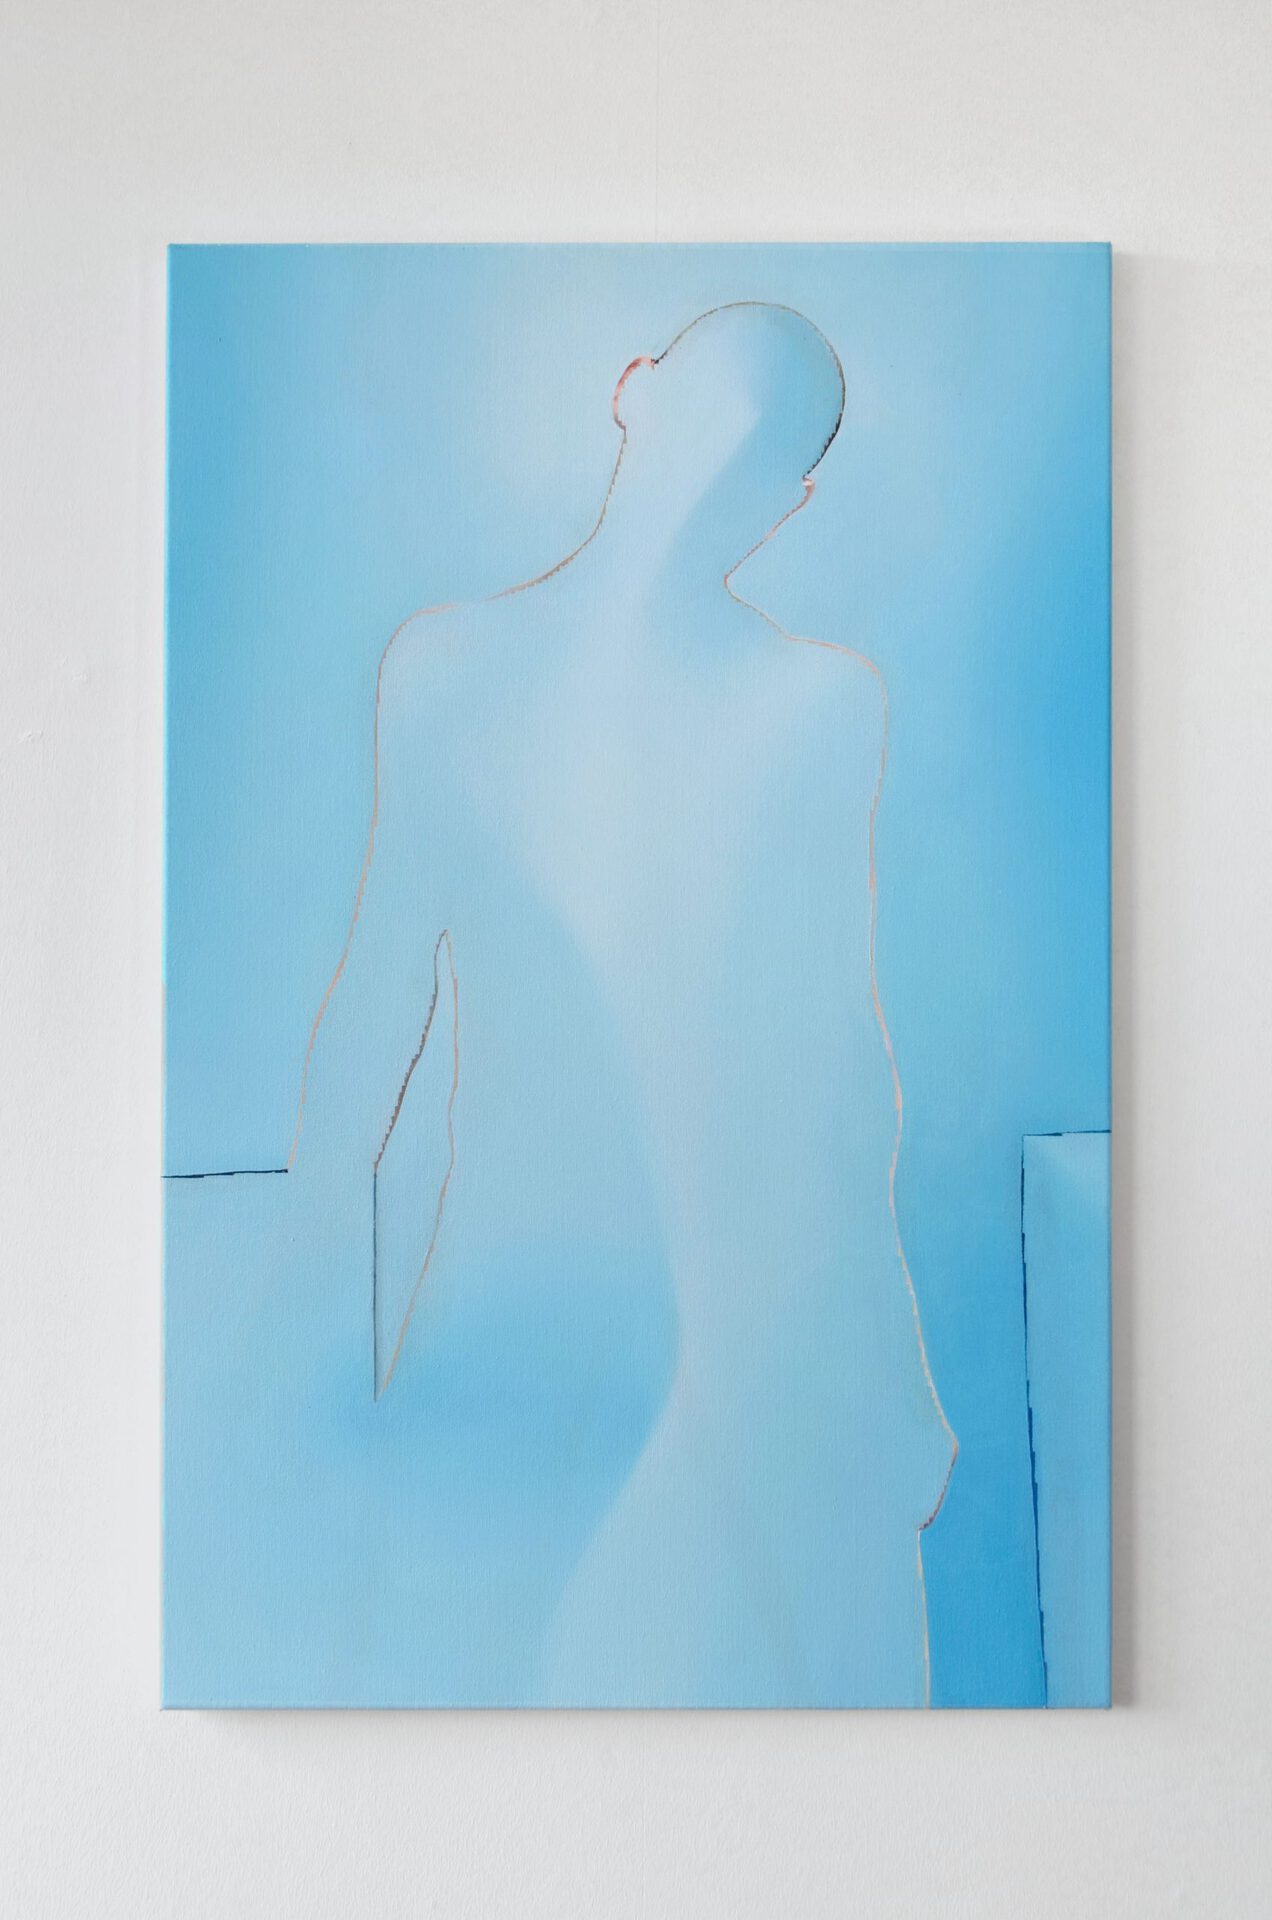 Leon Stoffelen, 04, oil and acrylic on canvas, 95 x 65 cm, 2020